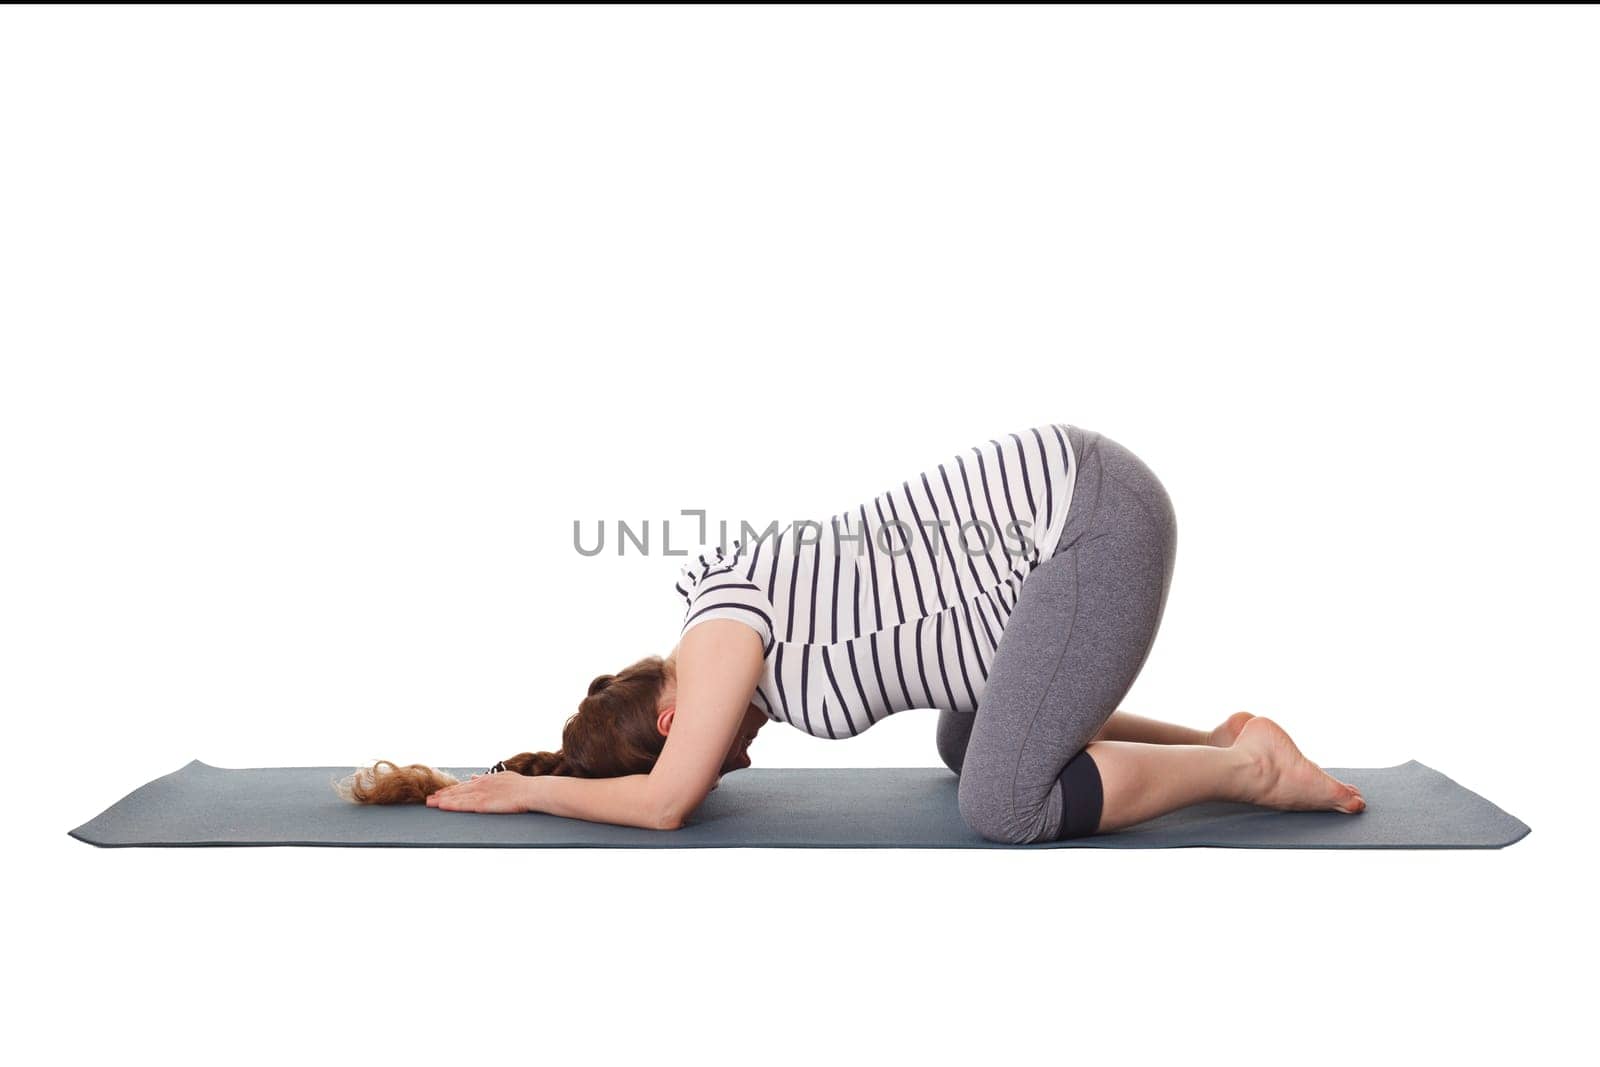 Pregnant woman doing yoga asana Balasana child pose by dimol